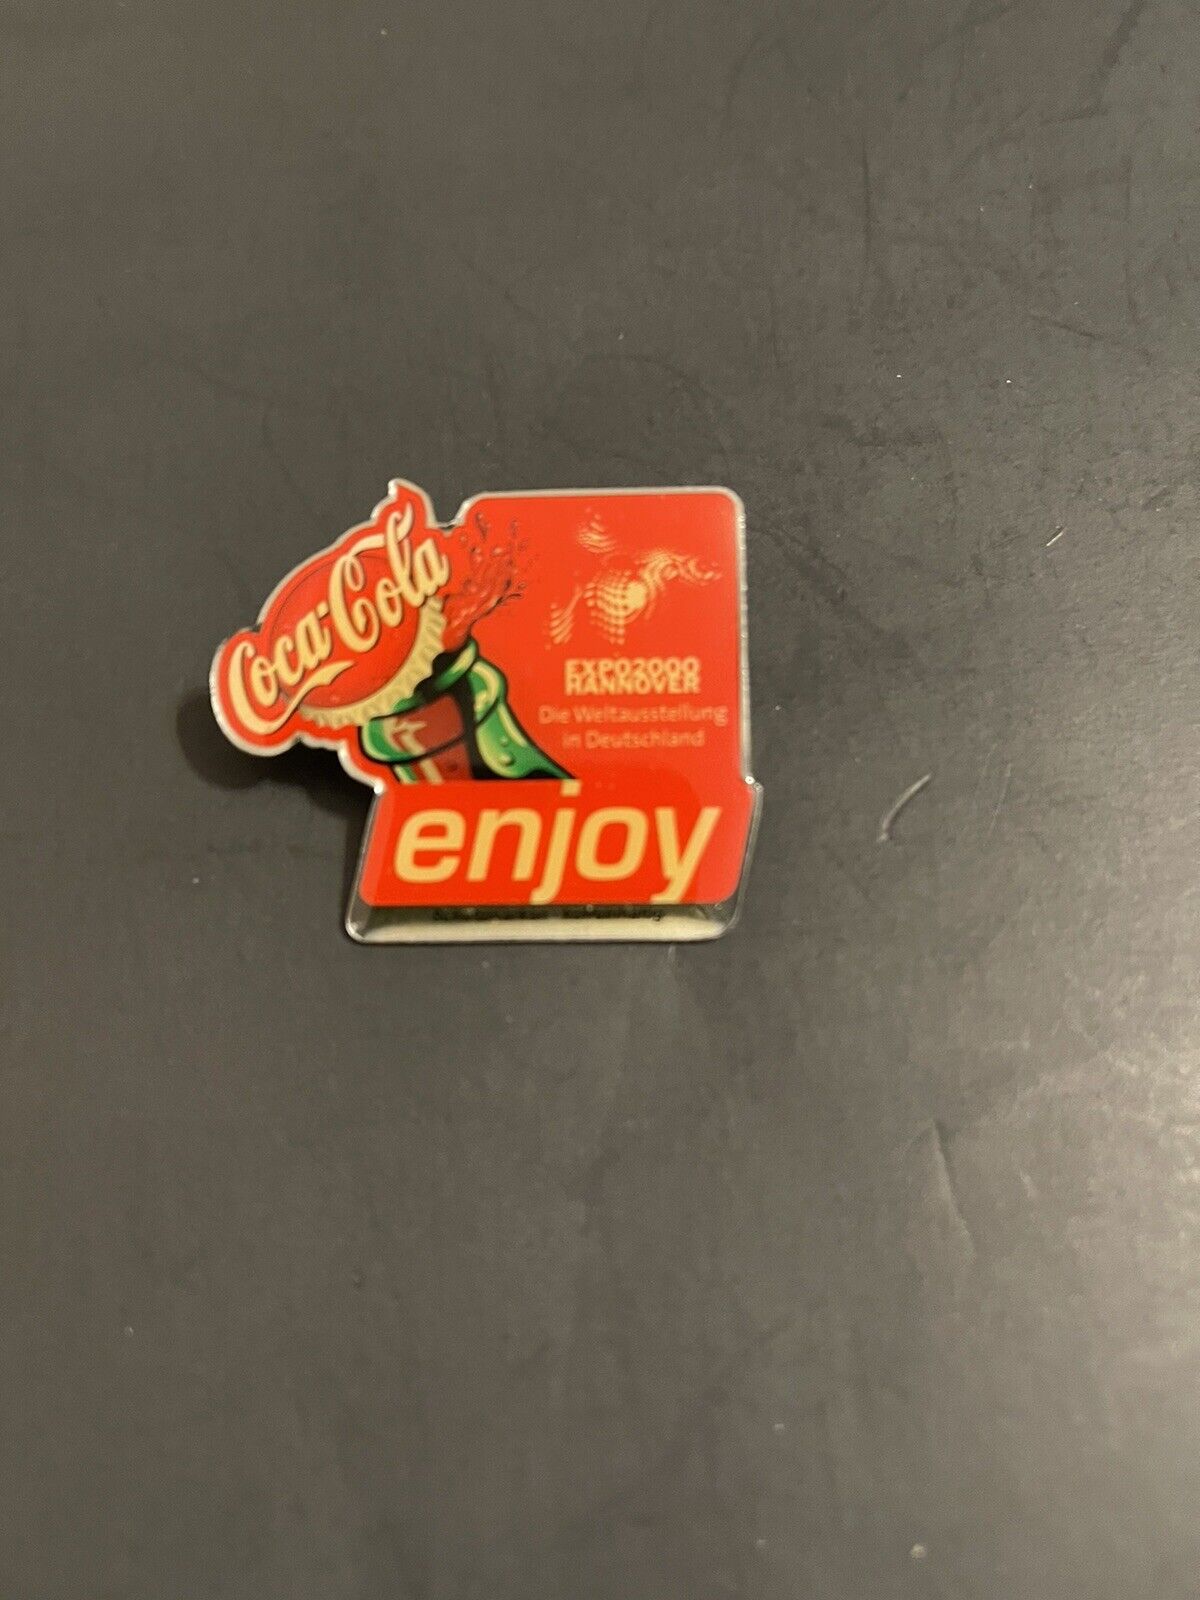 EXPO 2000 Handover Coca Cola Enjoy Lapel Pin